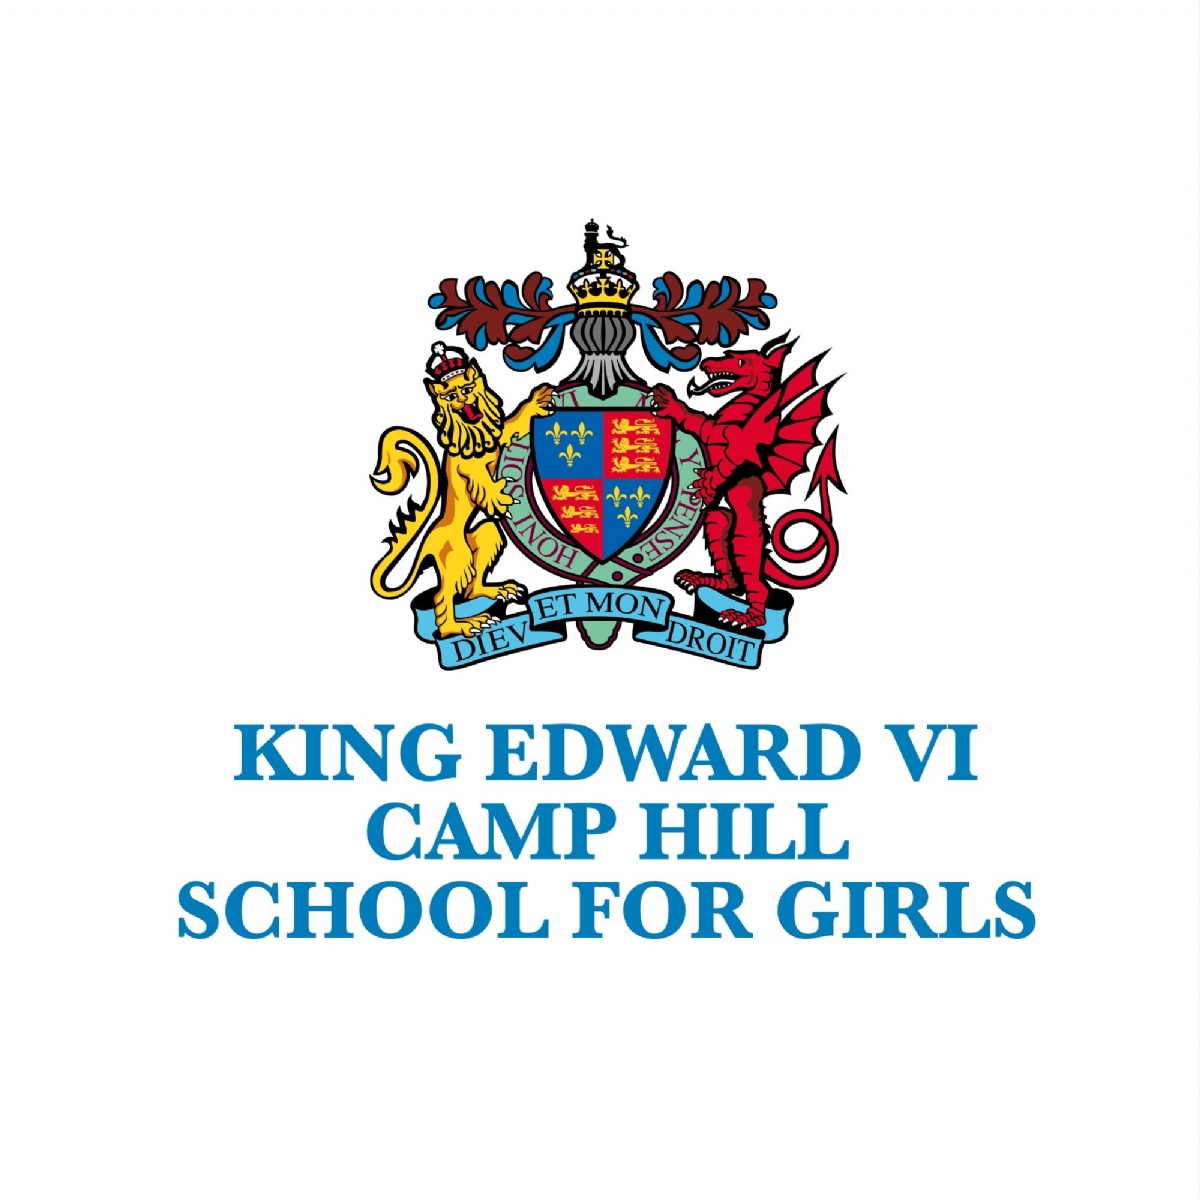 King Edward VI Camp Hill School for Girls